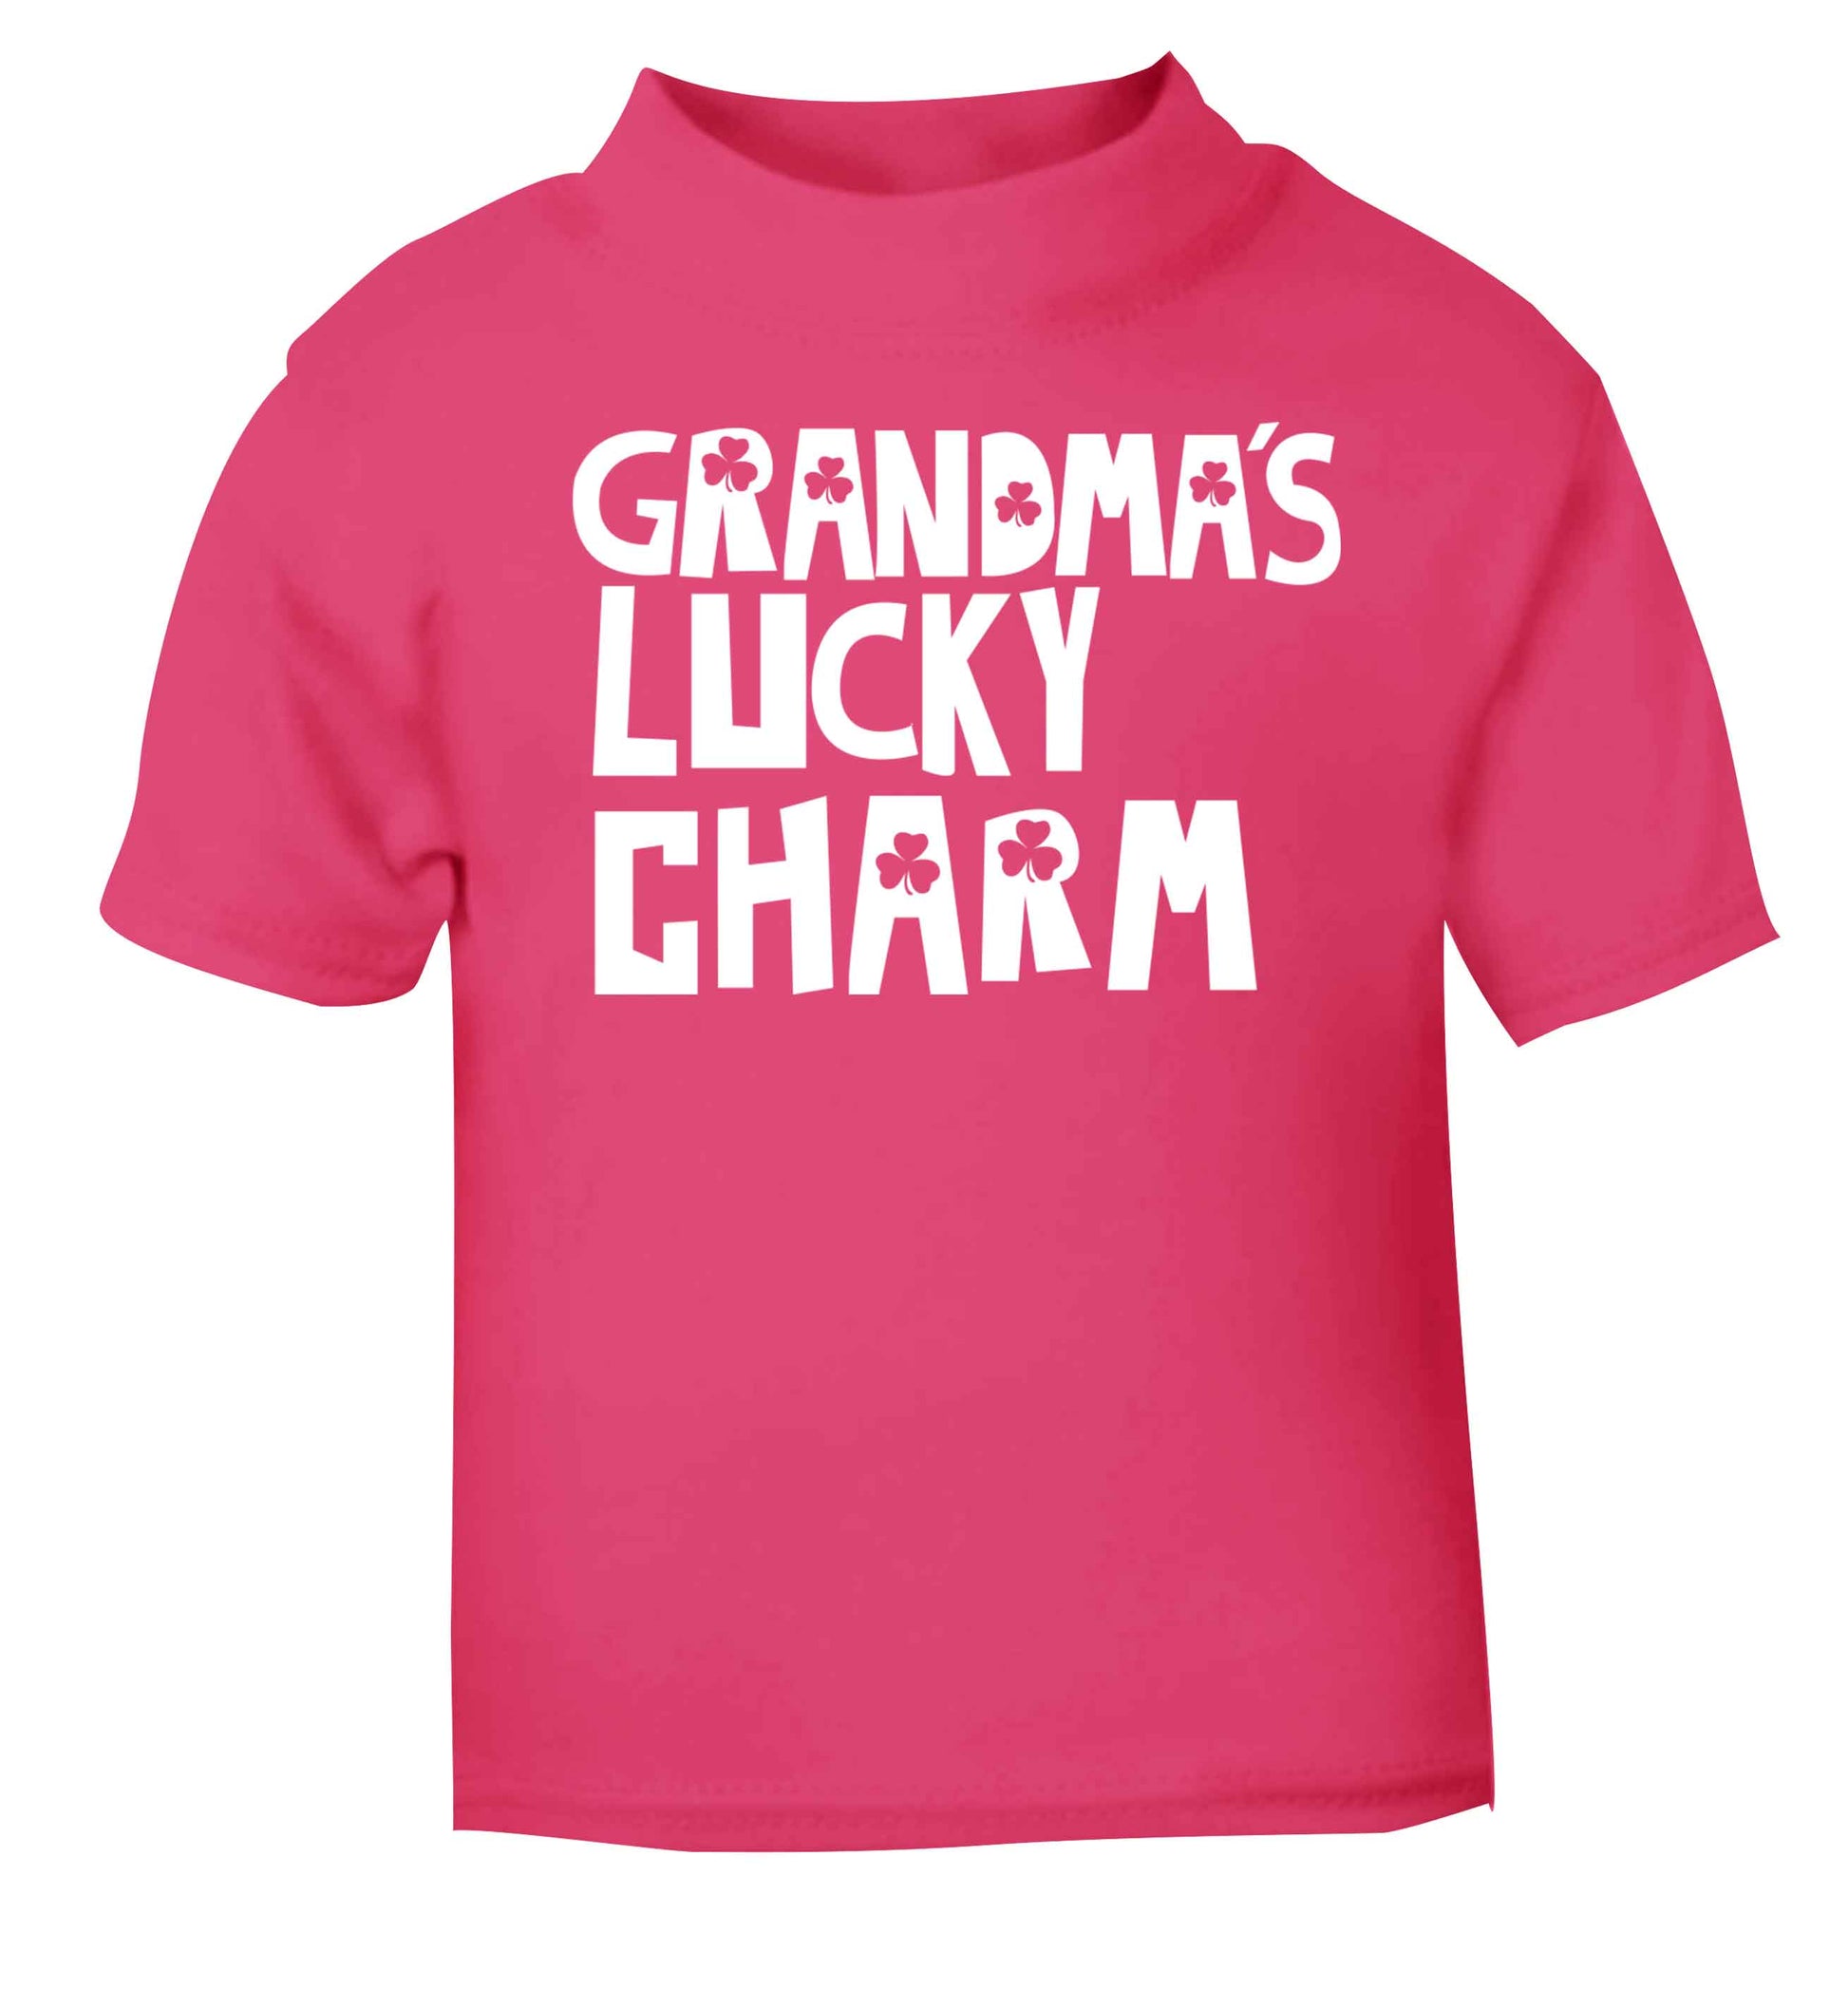 Grandma's lucky charm pink baby toddler Tshirt 2 Years